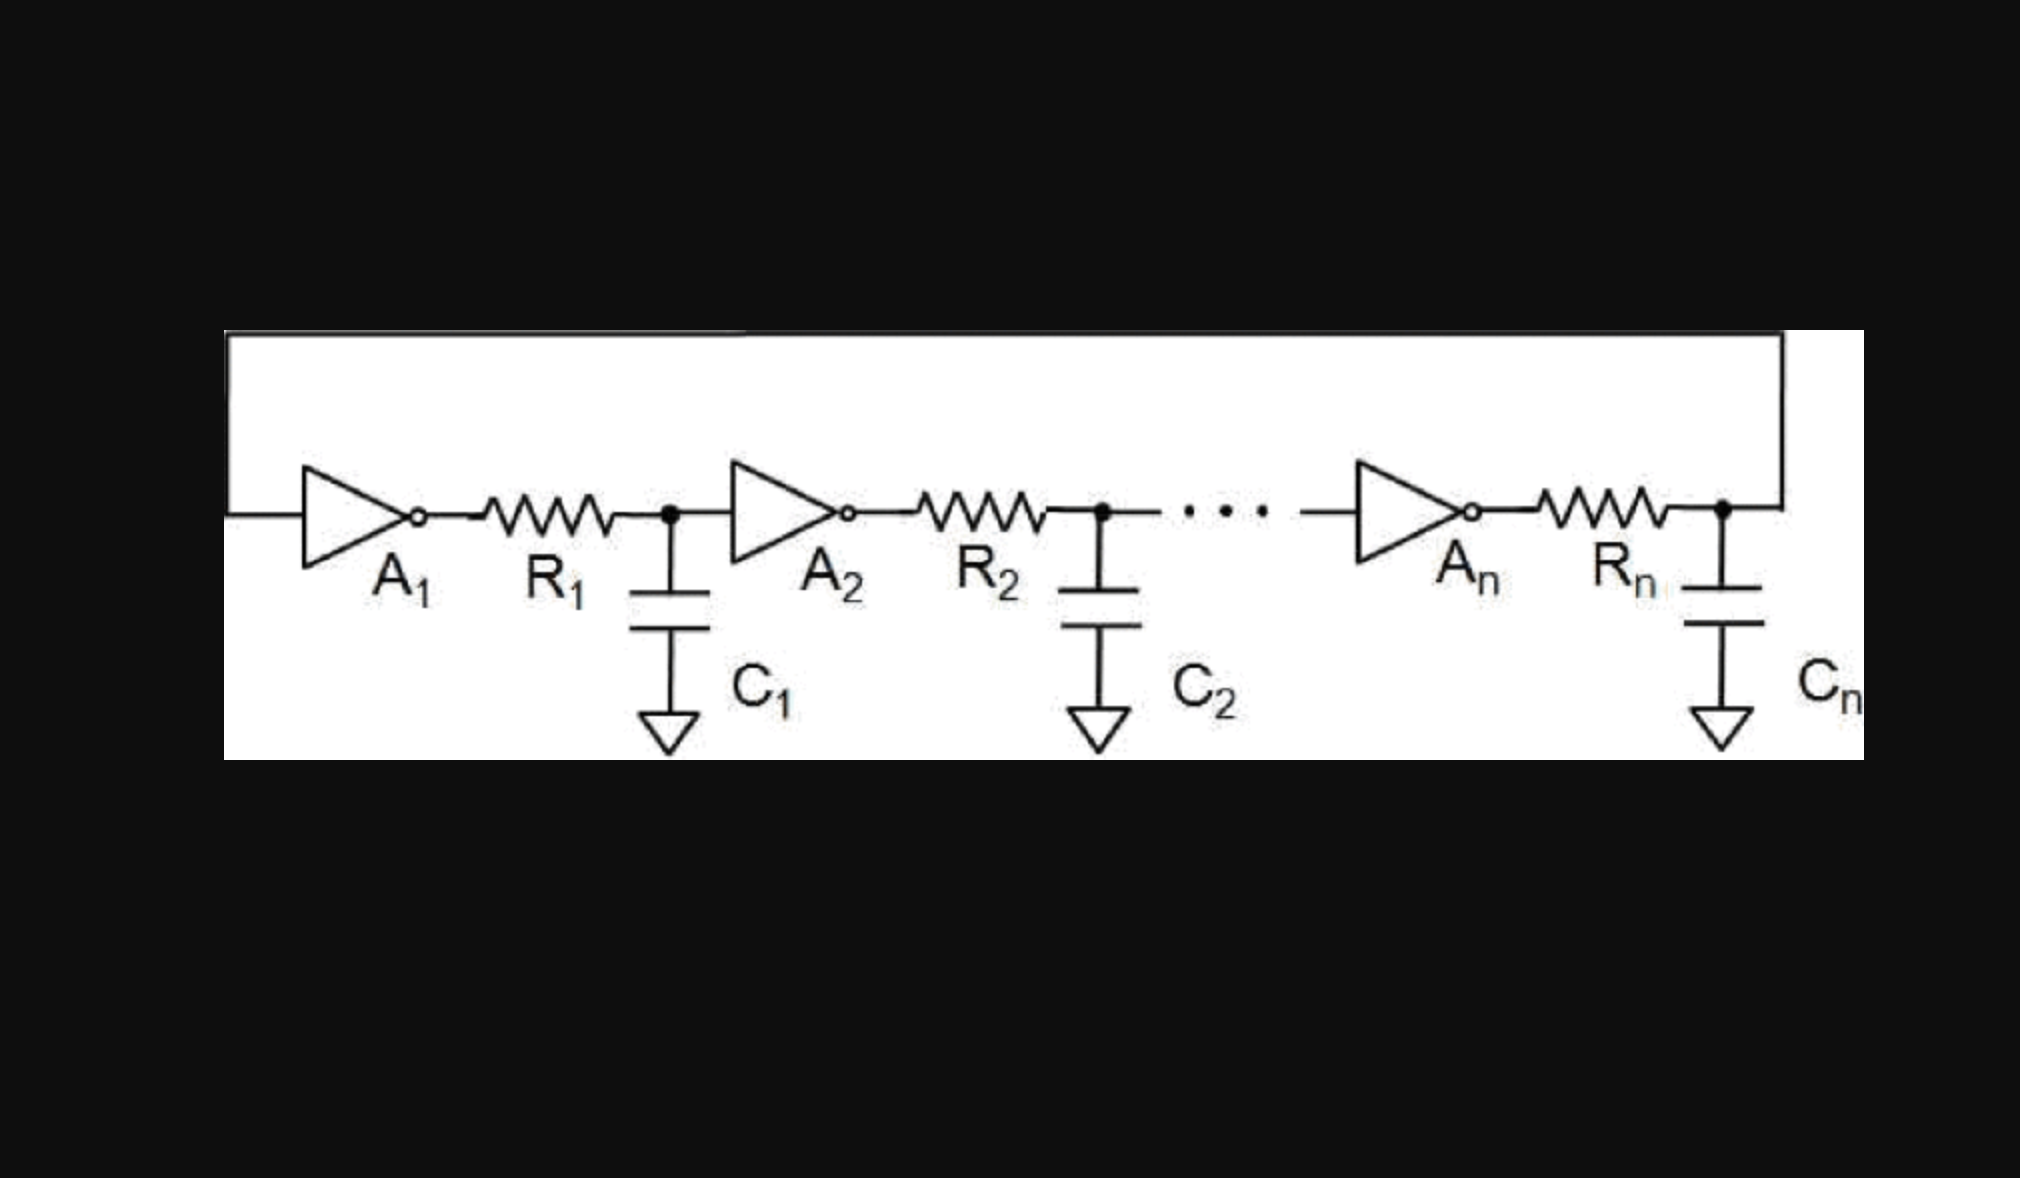 Nonlinear analysis of ring oscillator circuits